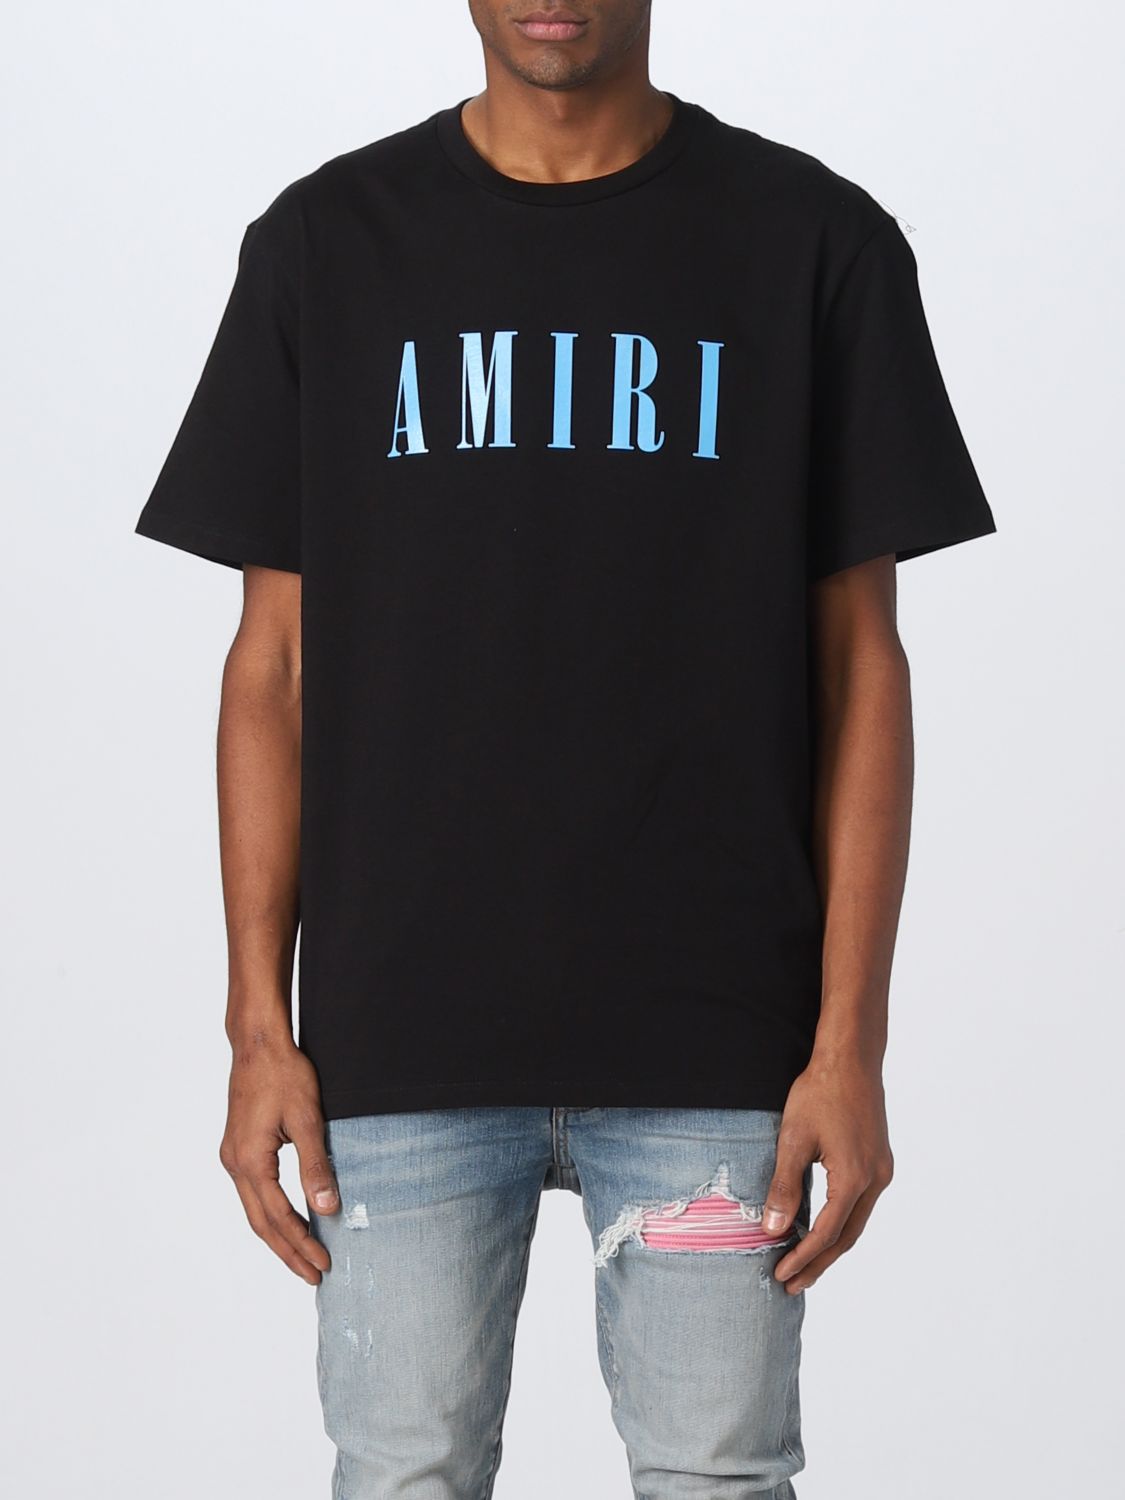 Amiri T Shirt For Man Black Amiri T Shirt Ps23mjl016 Online On Giglio